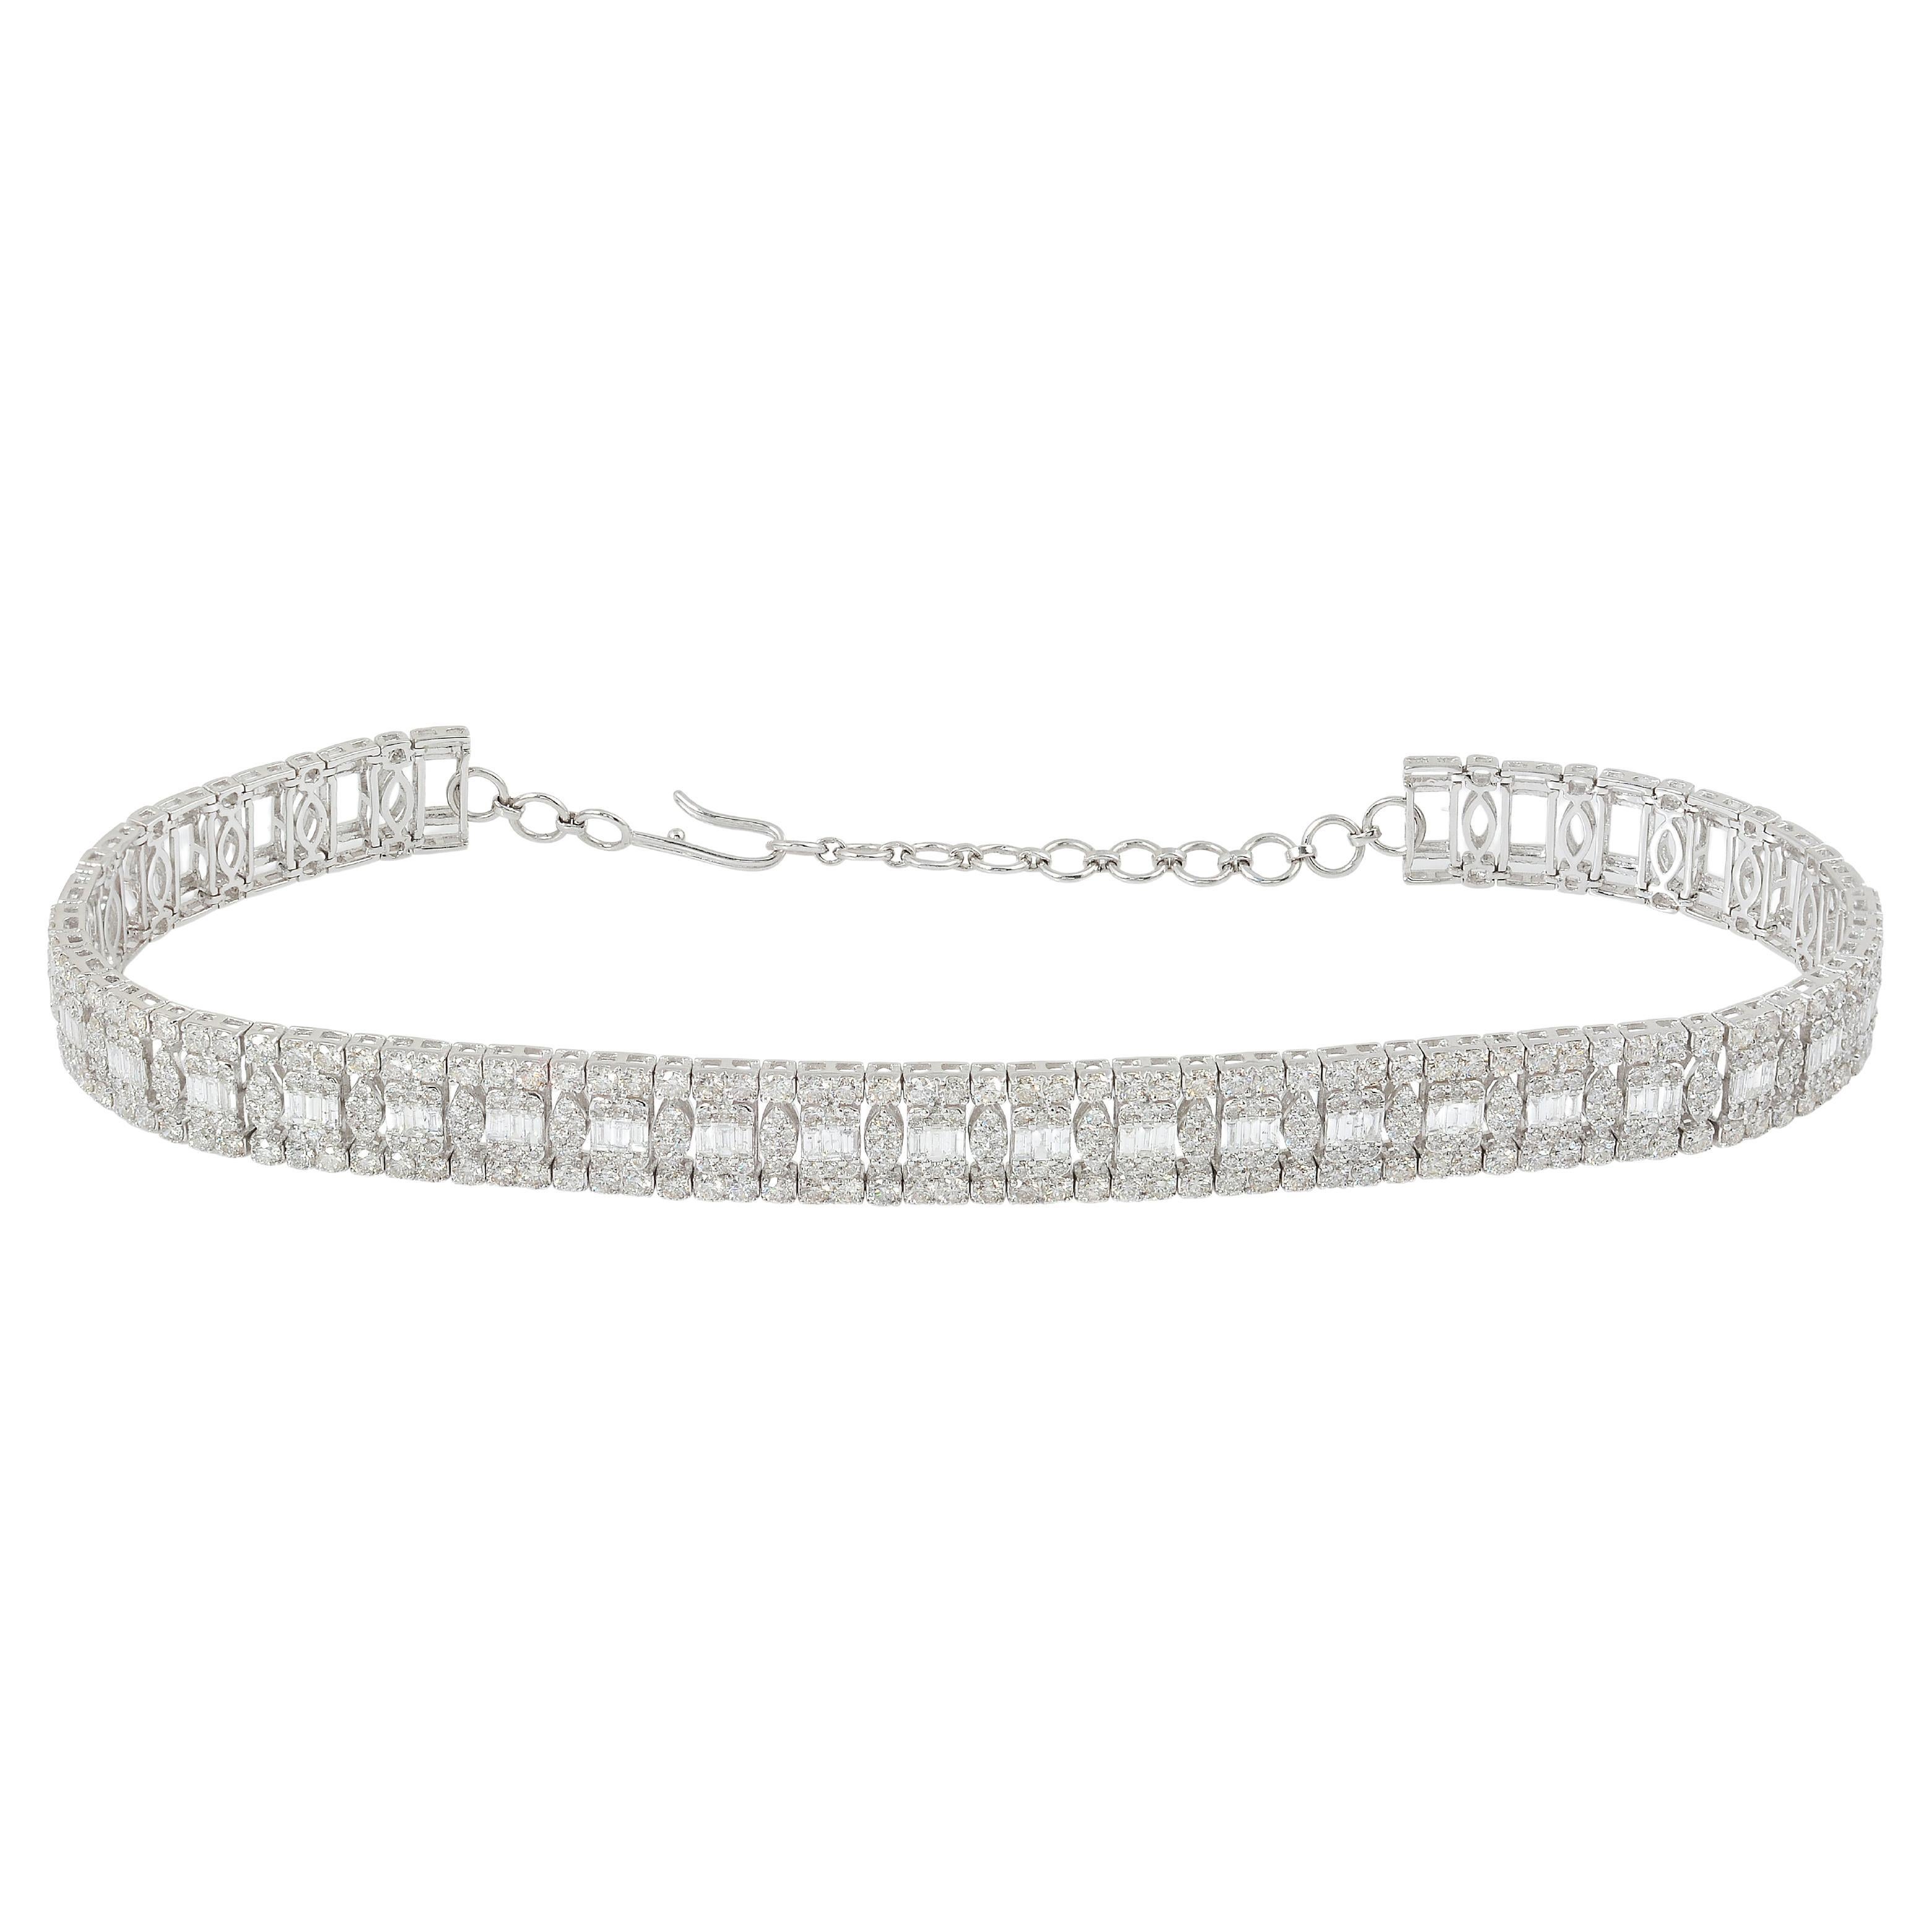 13.35 Carat SI/HI Baguette Diamond Choker Necklace 18 Karat White Gold Jewelry For Sale